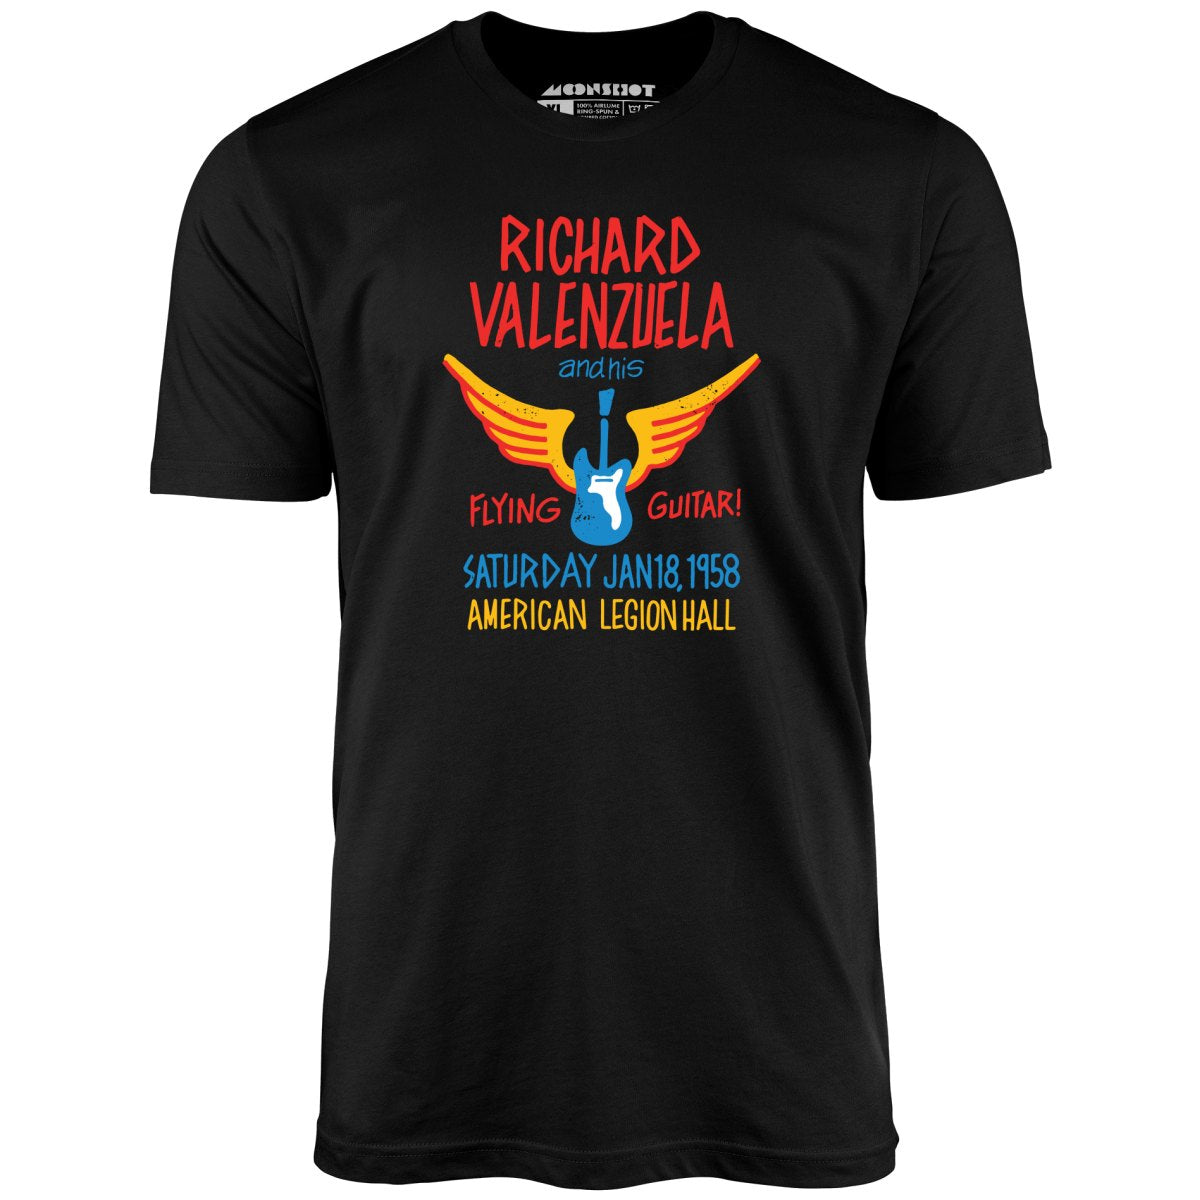 Richard Valenzuela and His Flying Guitar - Unisex T-Shirt